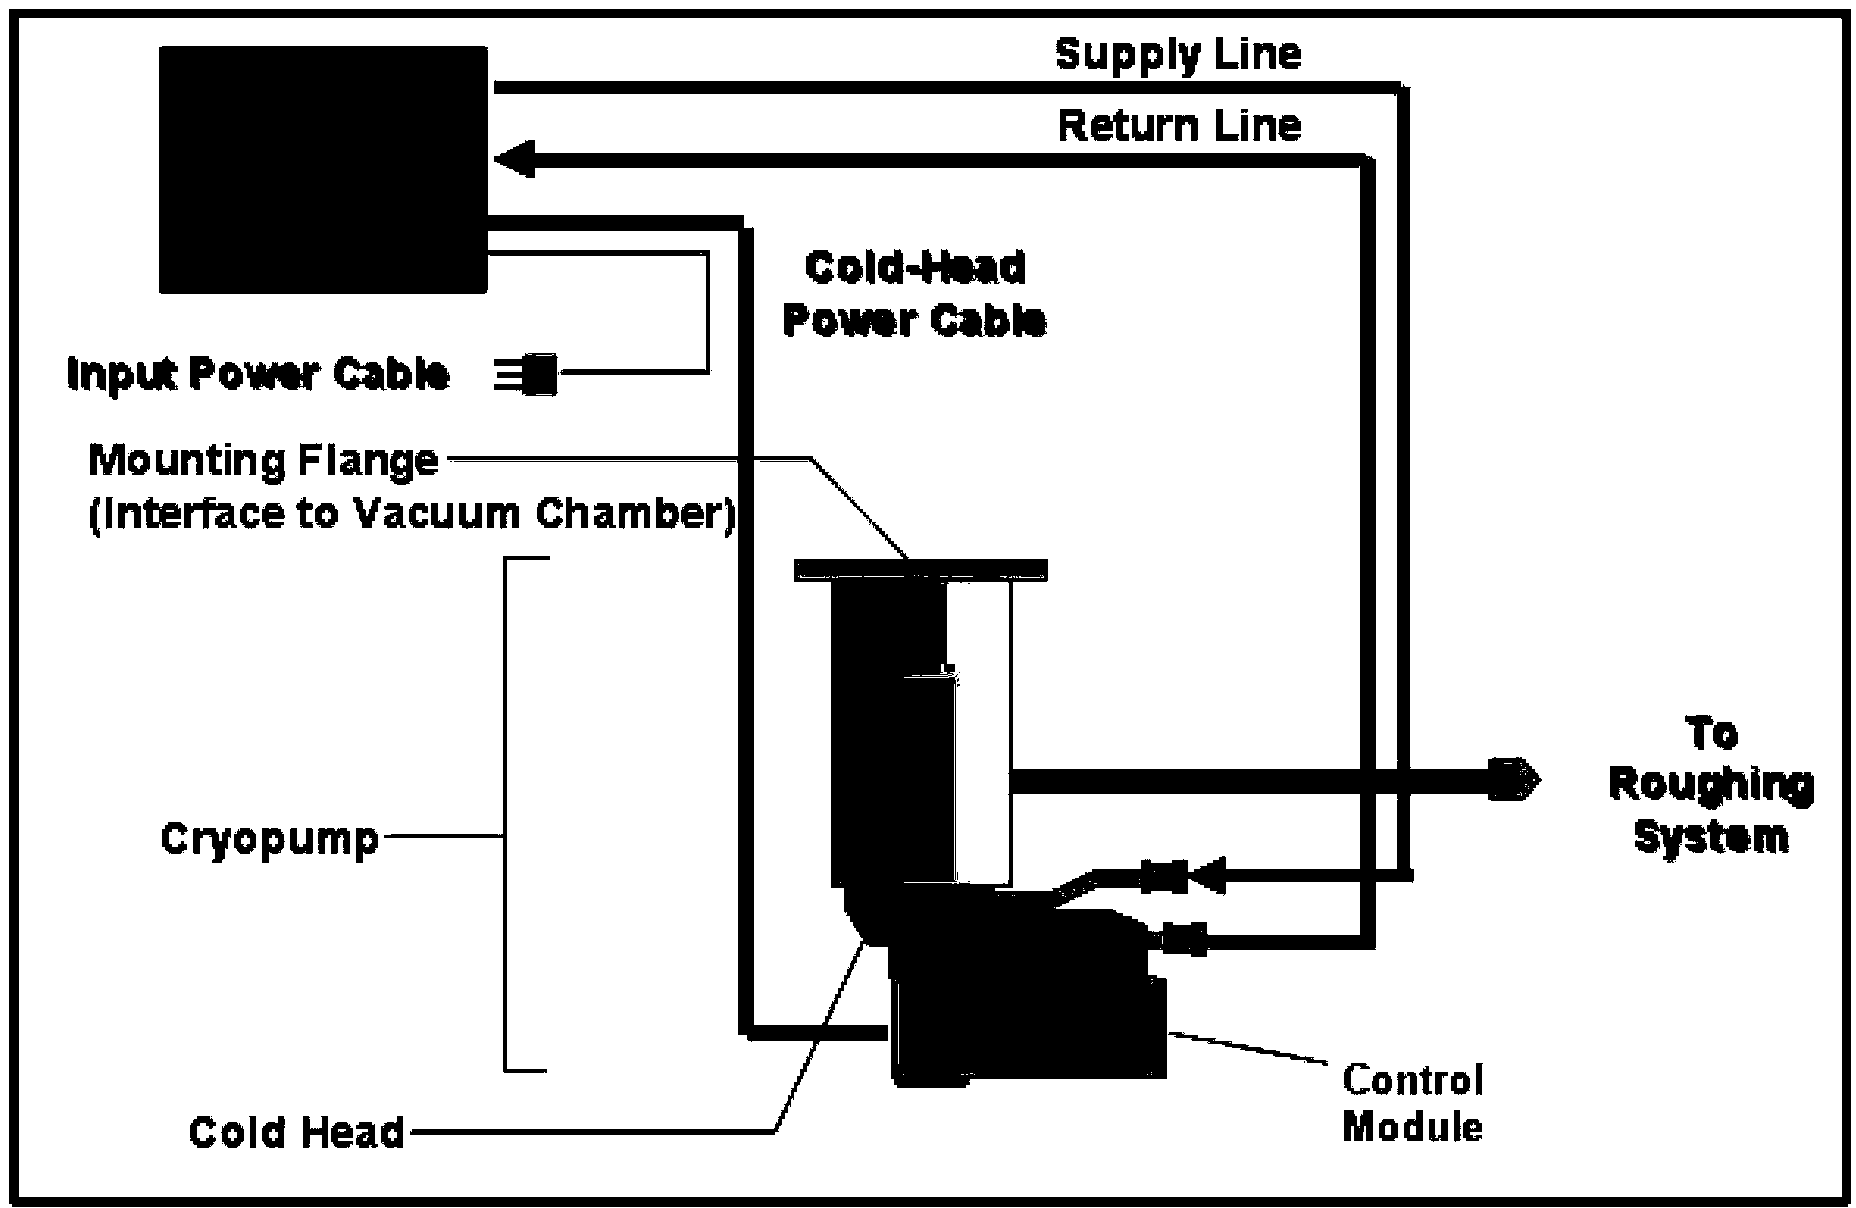 Refrigerating pump regeneration control method and system